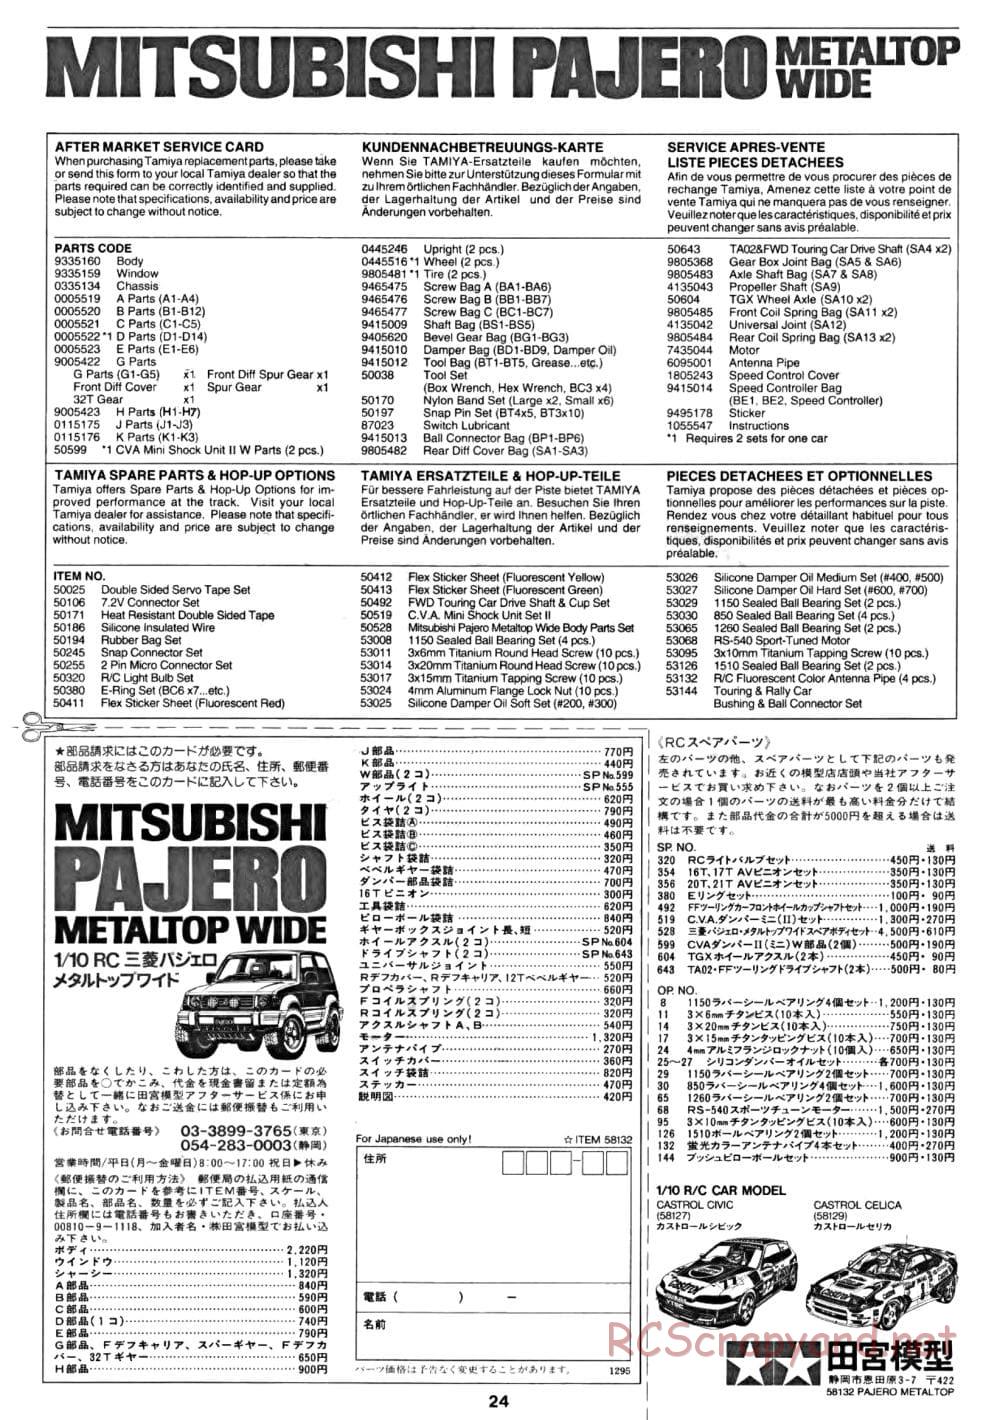 Tamiya - Mitsubishi Pajero Metaltop Wide - CC-01 Chassis - Manual - Page 24